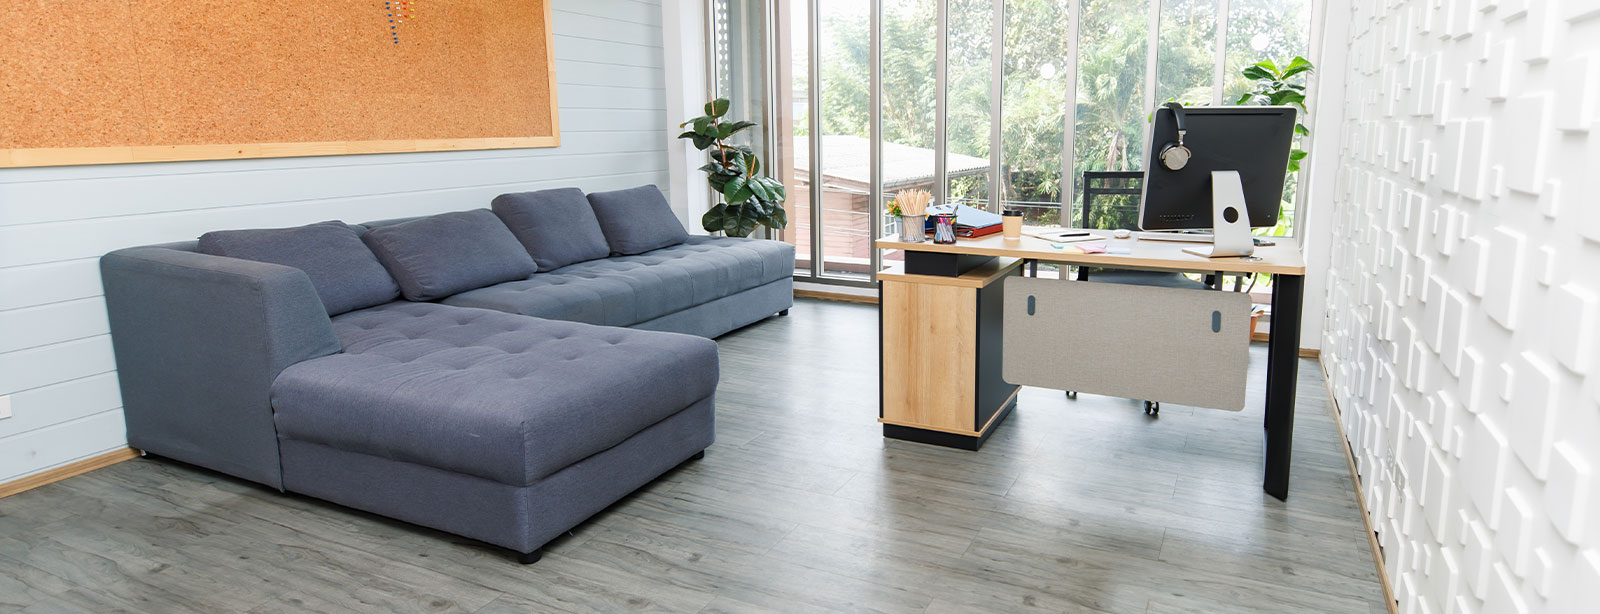 Silla o sillón para oficina: ¿qué es mejor?